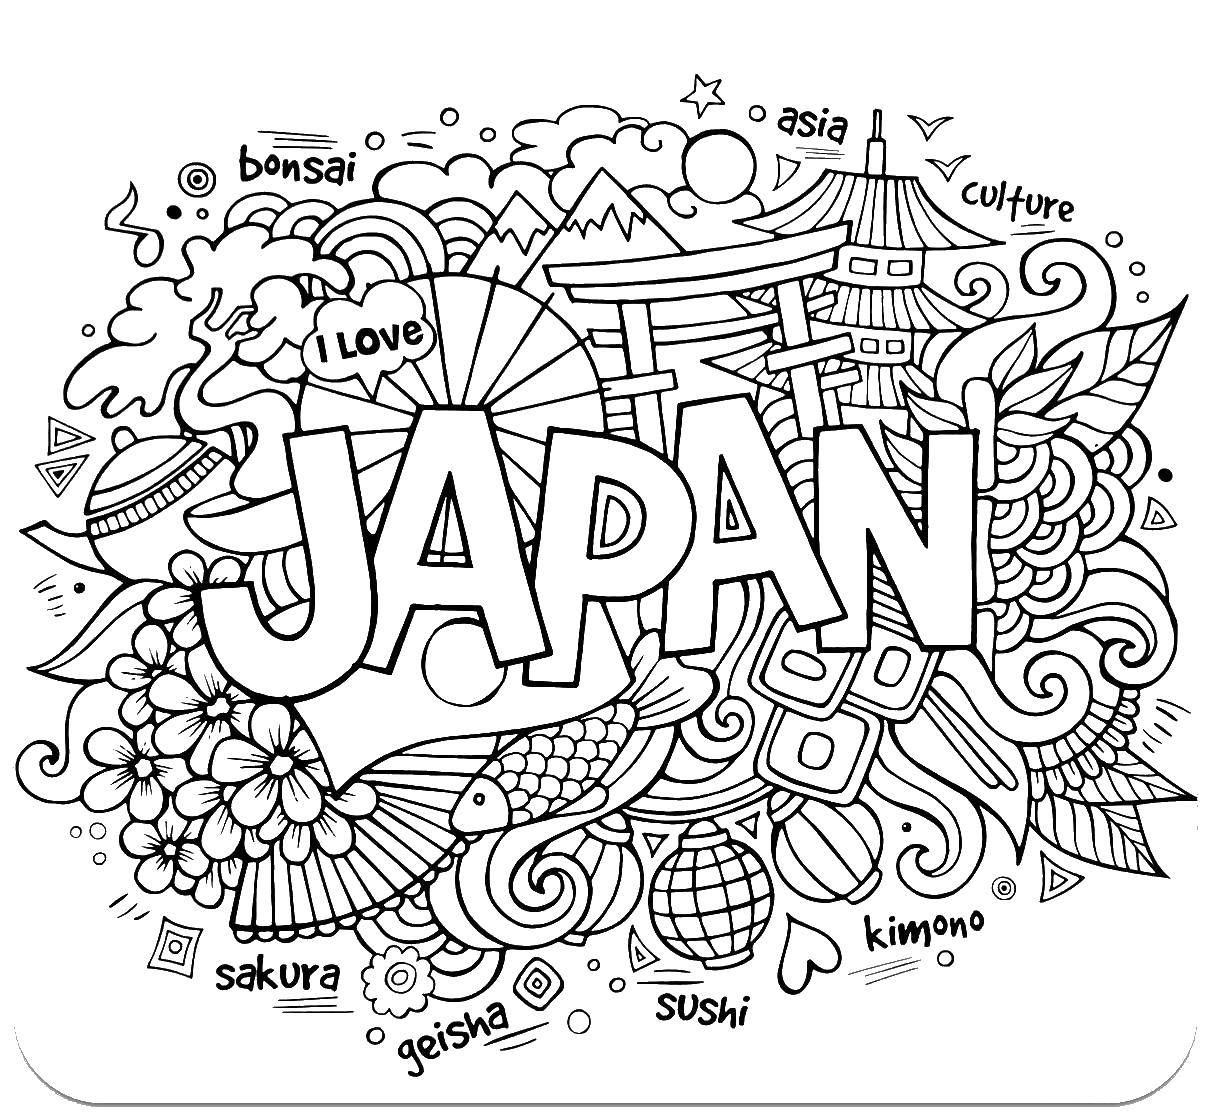 Название: Раскраска Япония. Категория: раскраски антистресс. Теги: антистресс, сакура, япония, гейша.